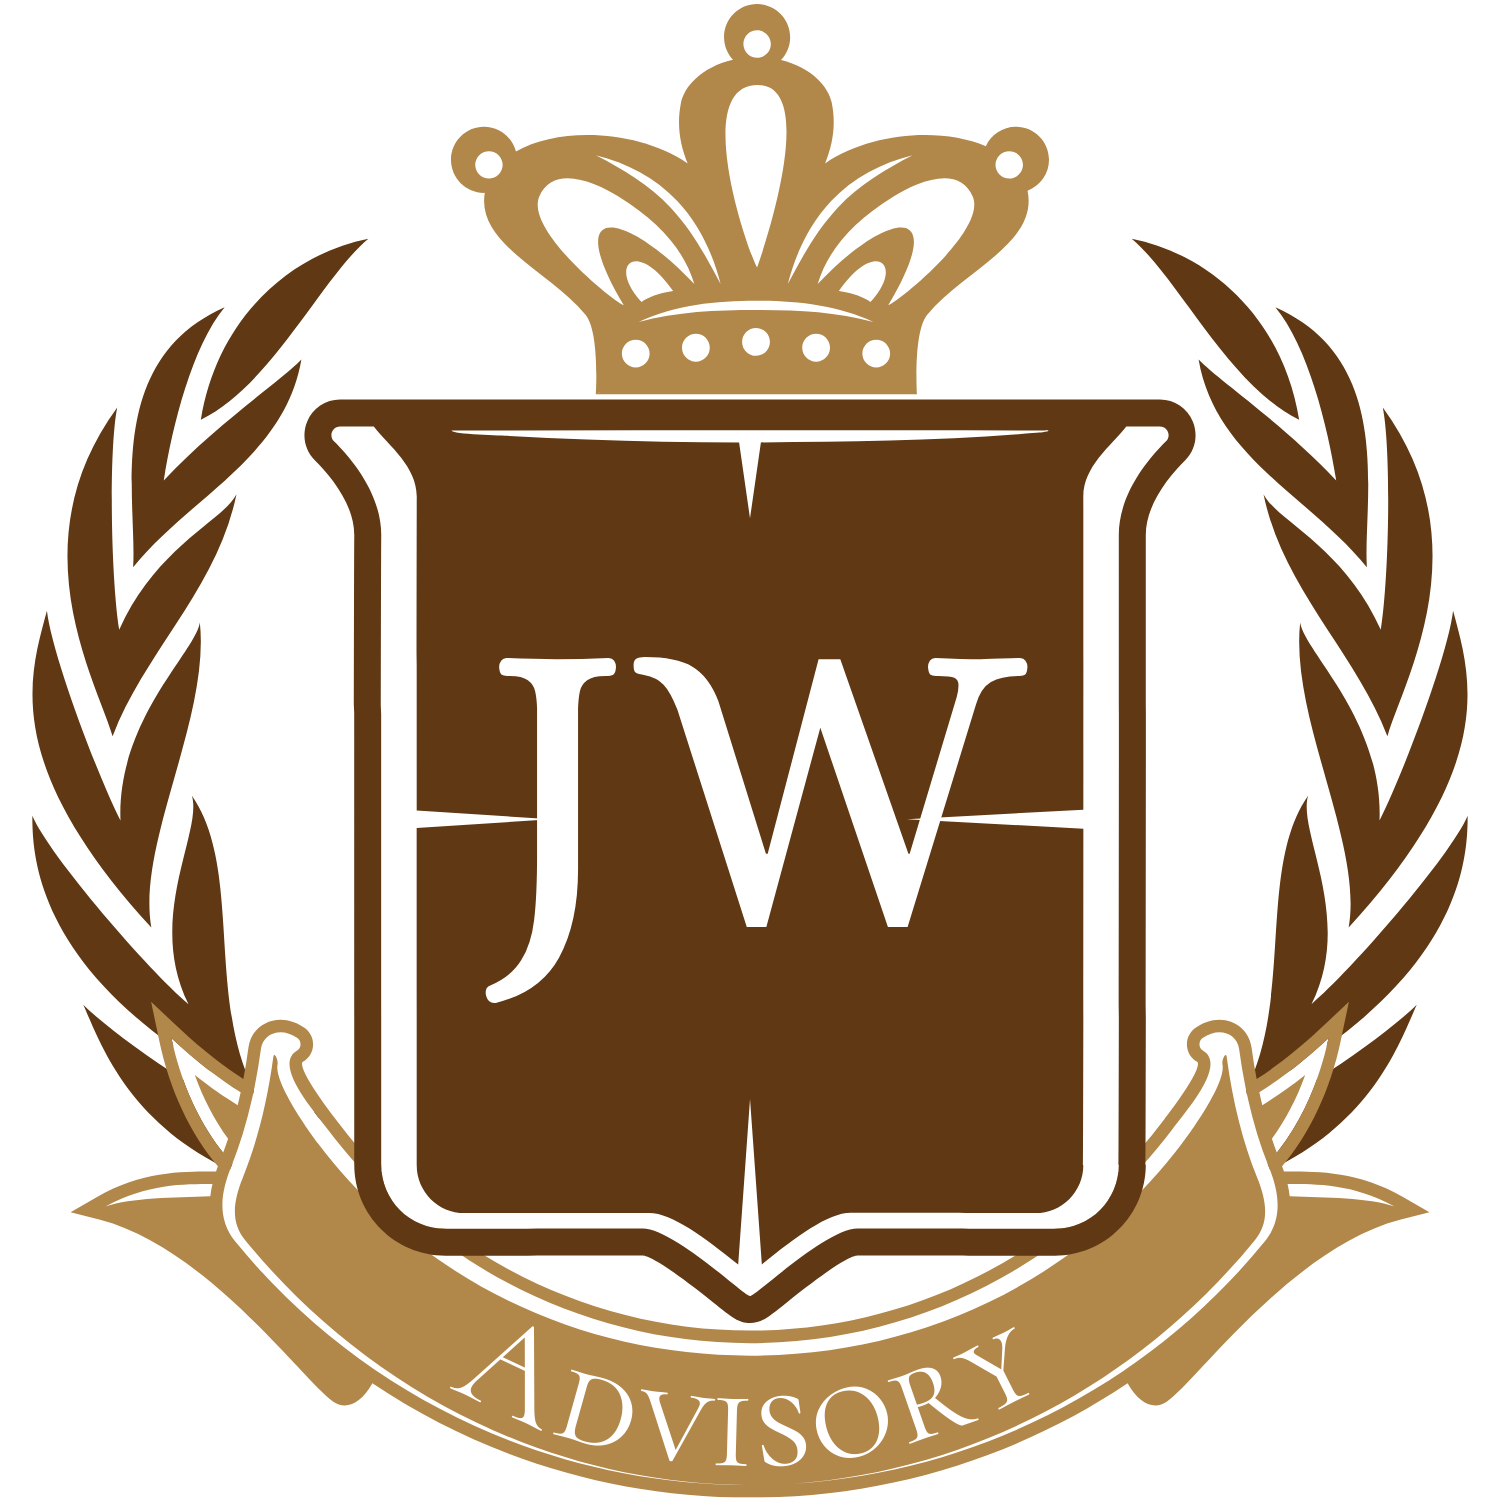 JW Advisory